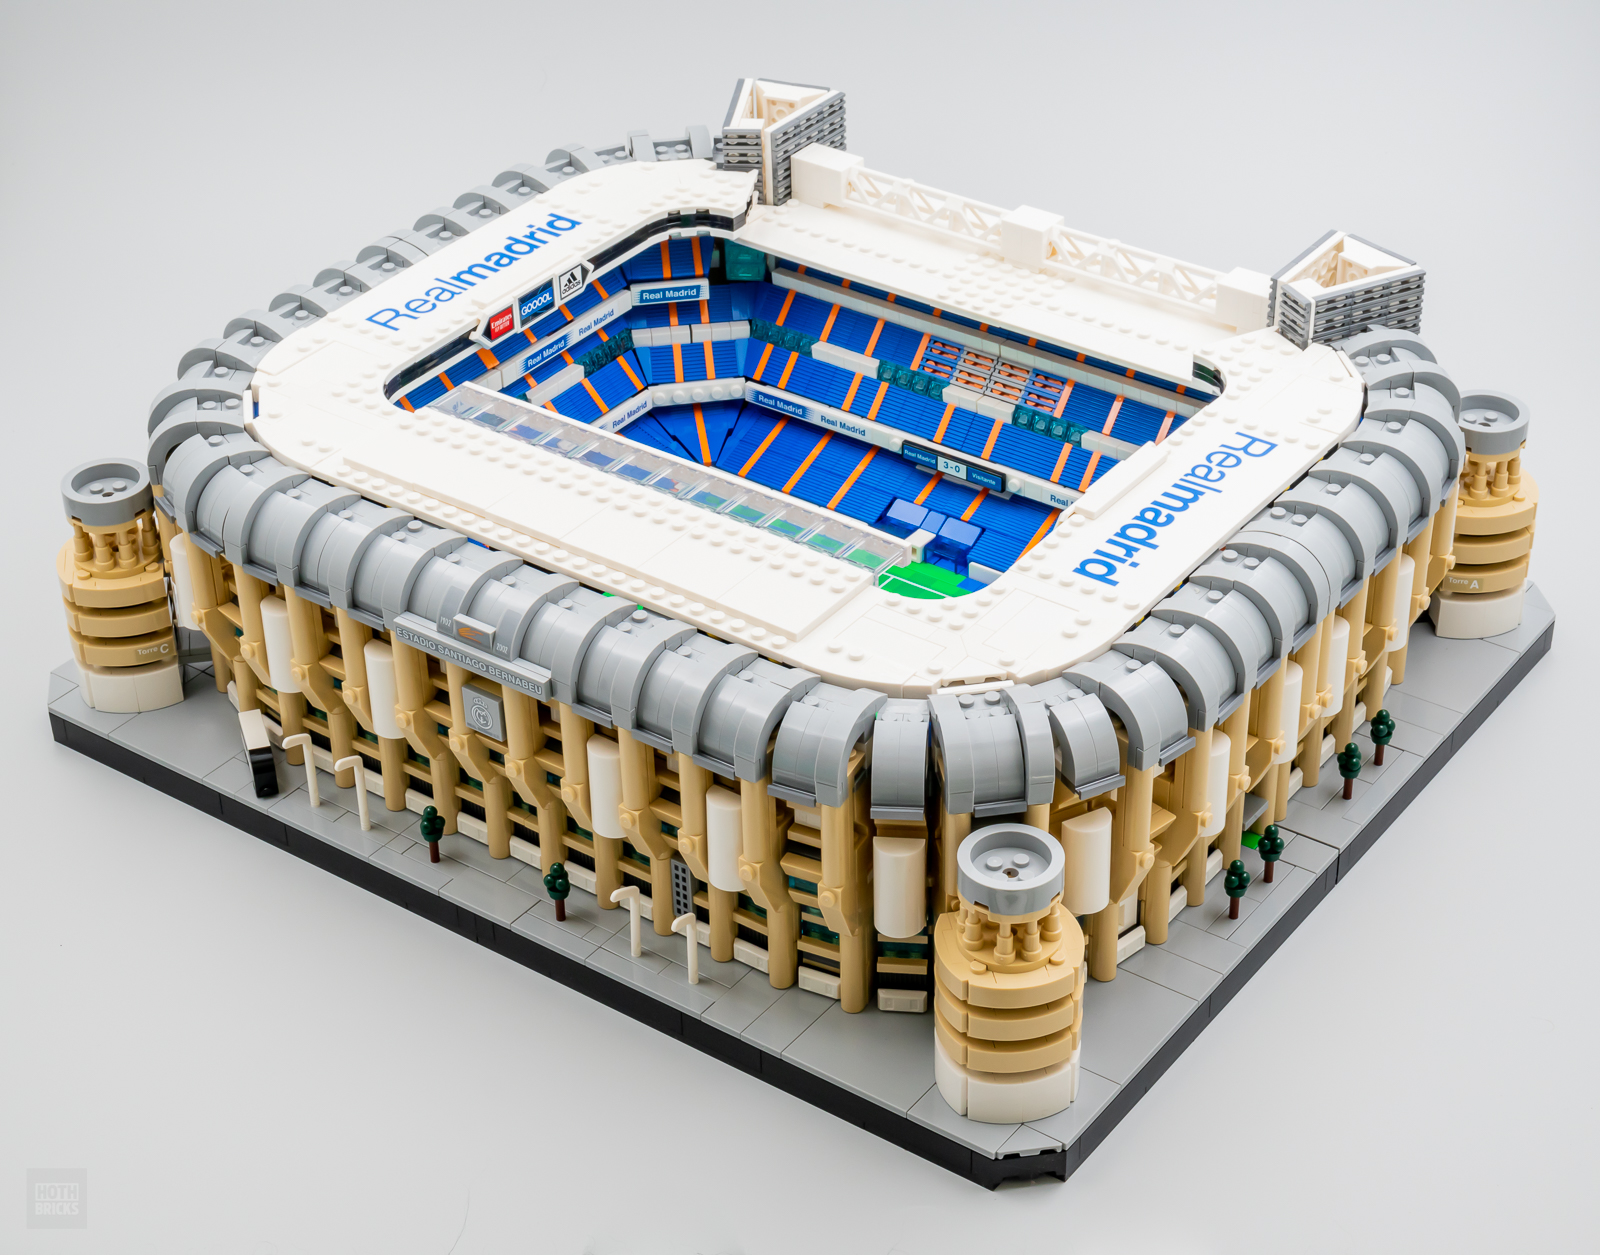 PHOTOS: You can buy stadium replicas made from Legos 